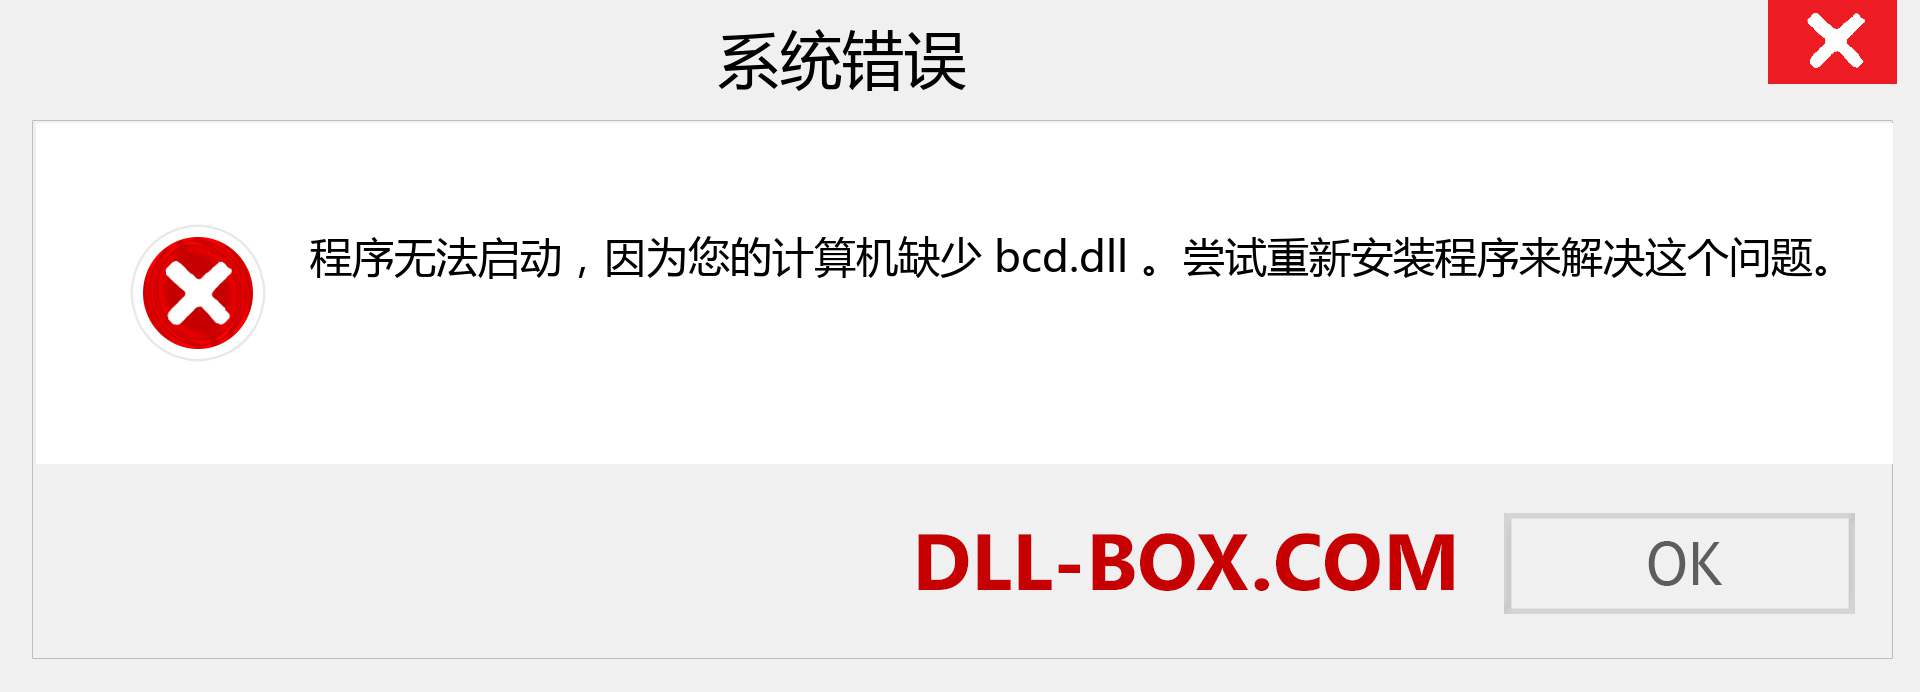 bcd.dll 文件丢失？。 适用于 Windows 7、8、10 的下载 - 修复 Windows、照片、图像上的 bcd dll 丢失错误